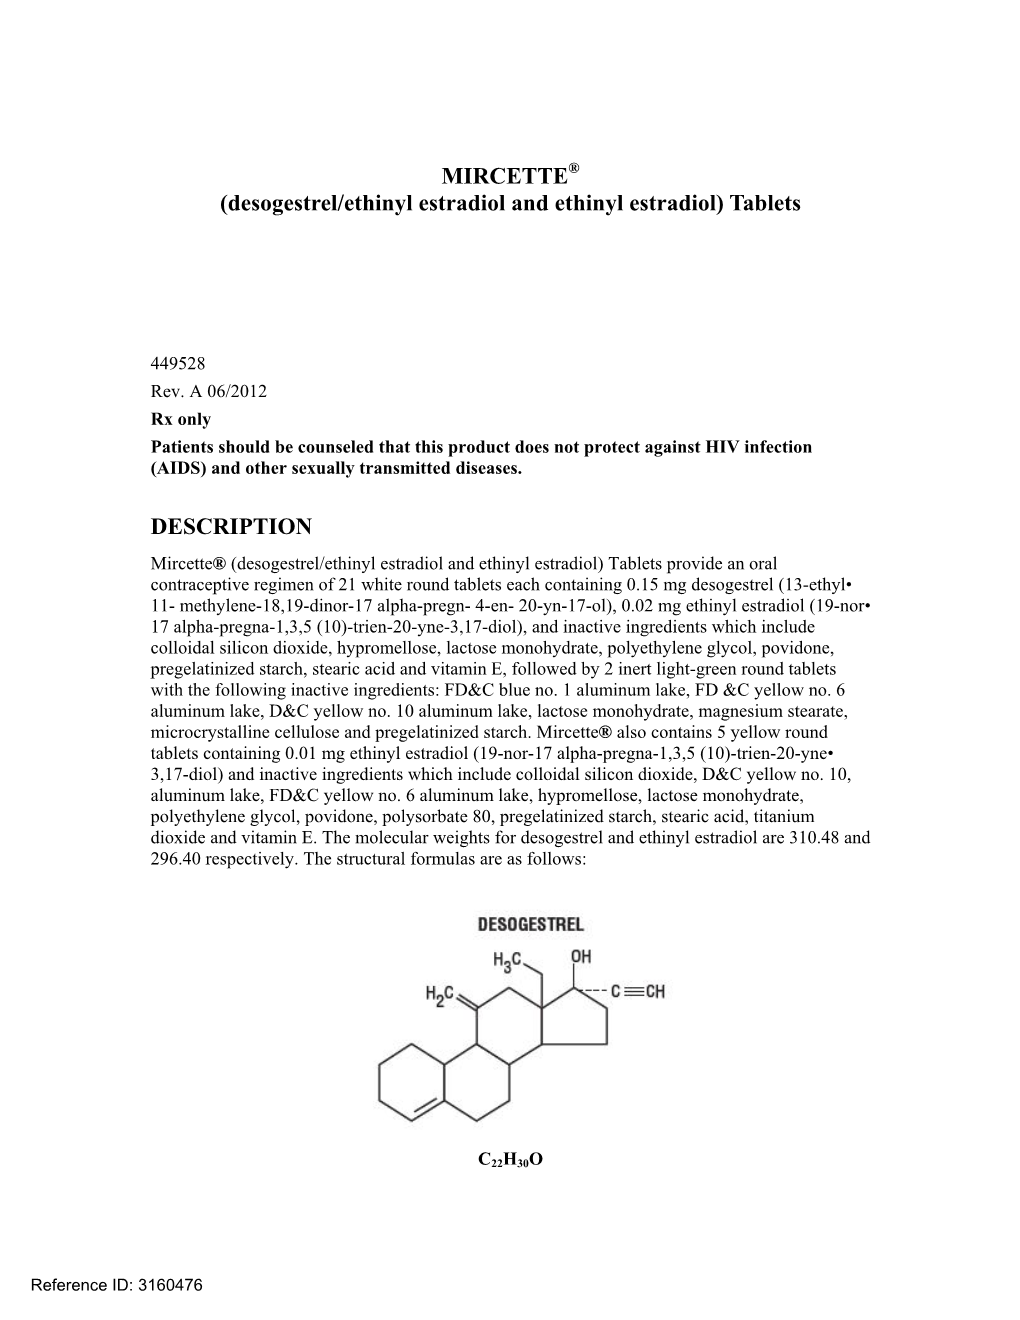 MIRCETTE (Desogestrel/Ethinyl Estradiol And